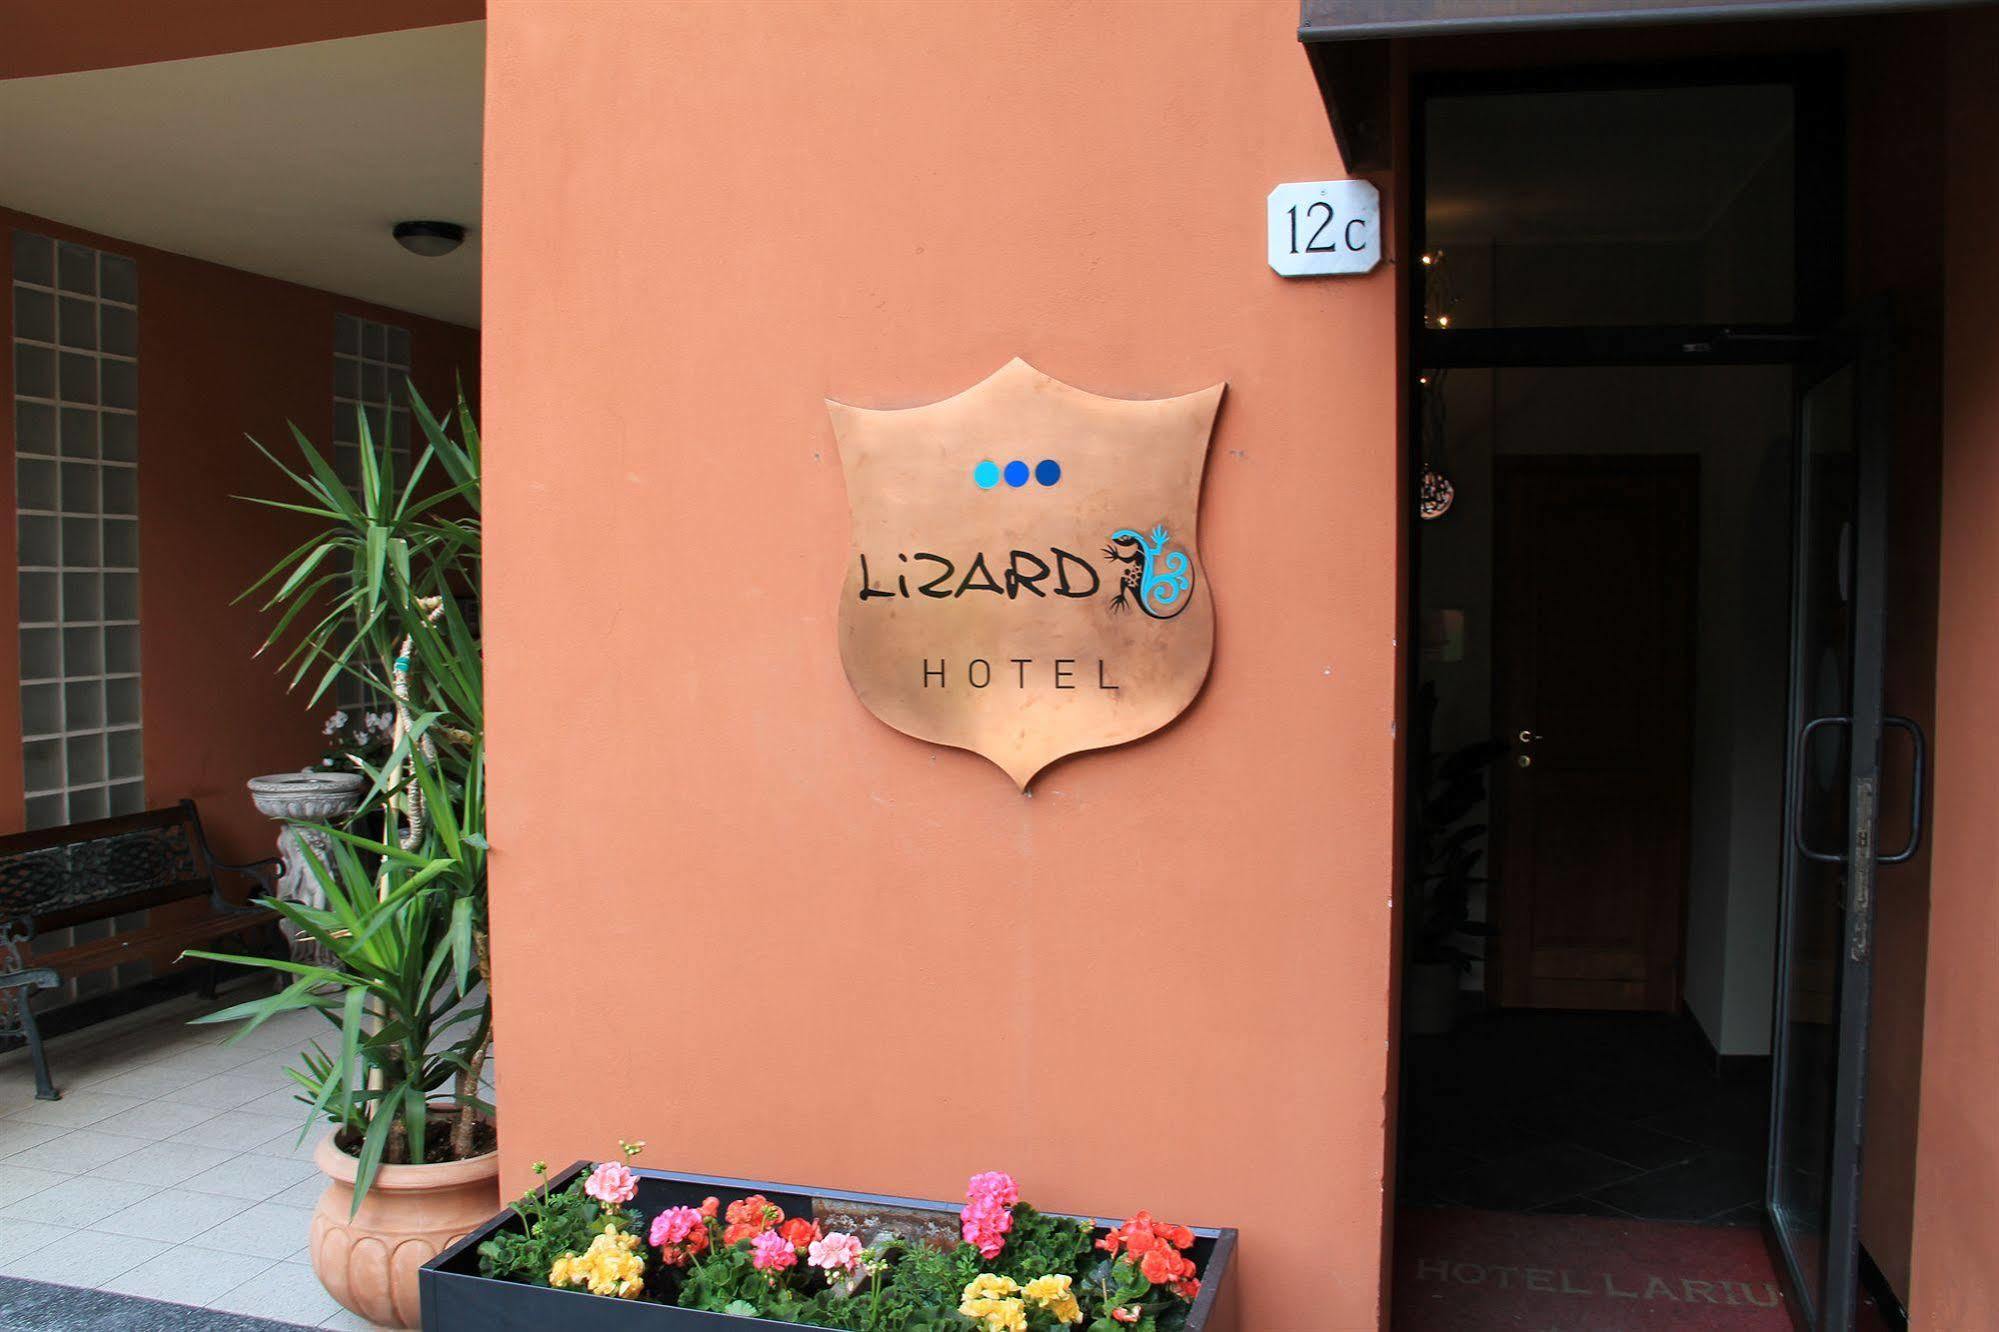 Lizard Hotel Комо Экстерьер фото